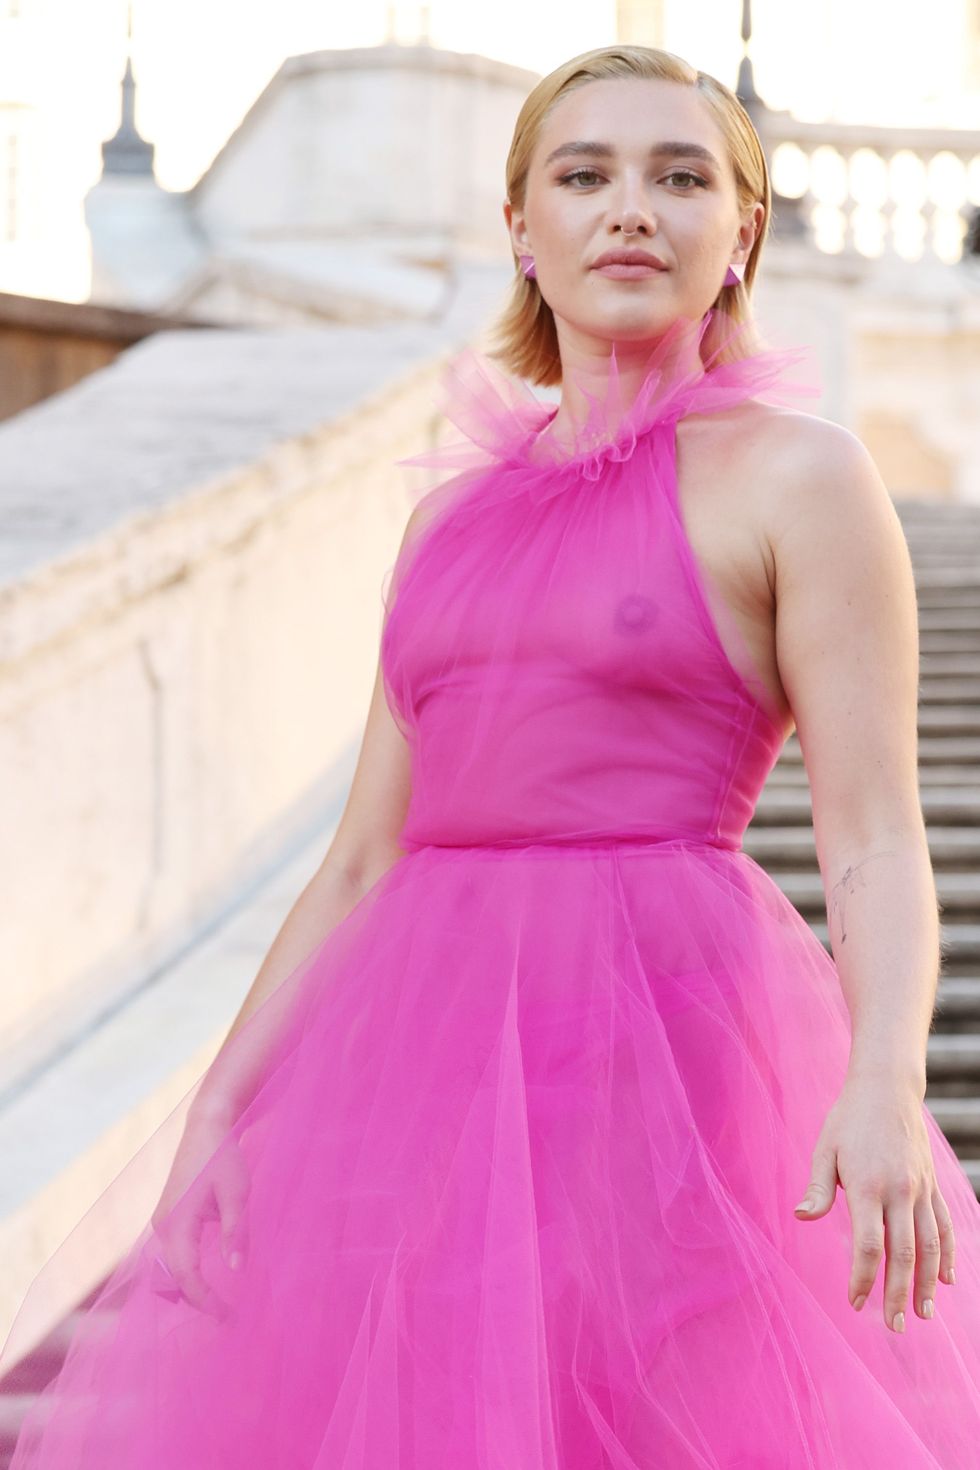 Florence Pugh Responds to Trolls Over Sheer Pink Dress